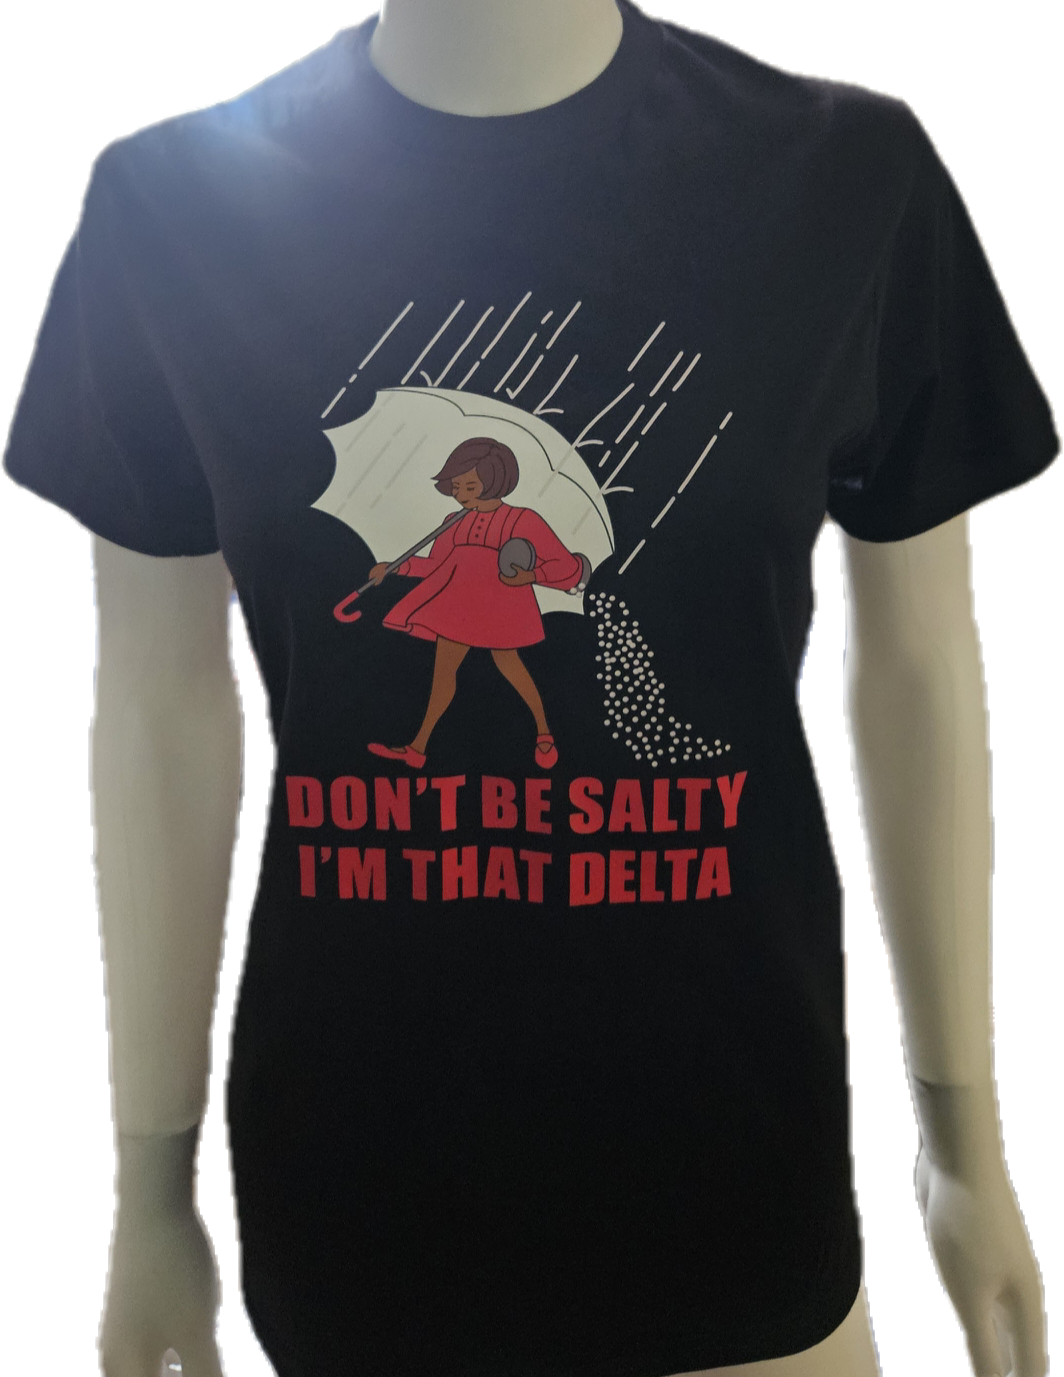 Delta Salty Tshirt